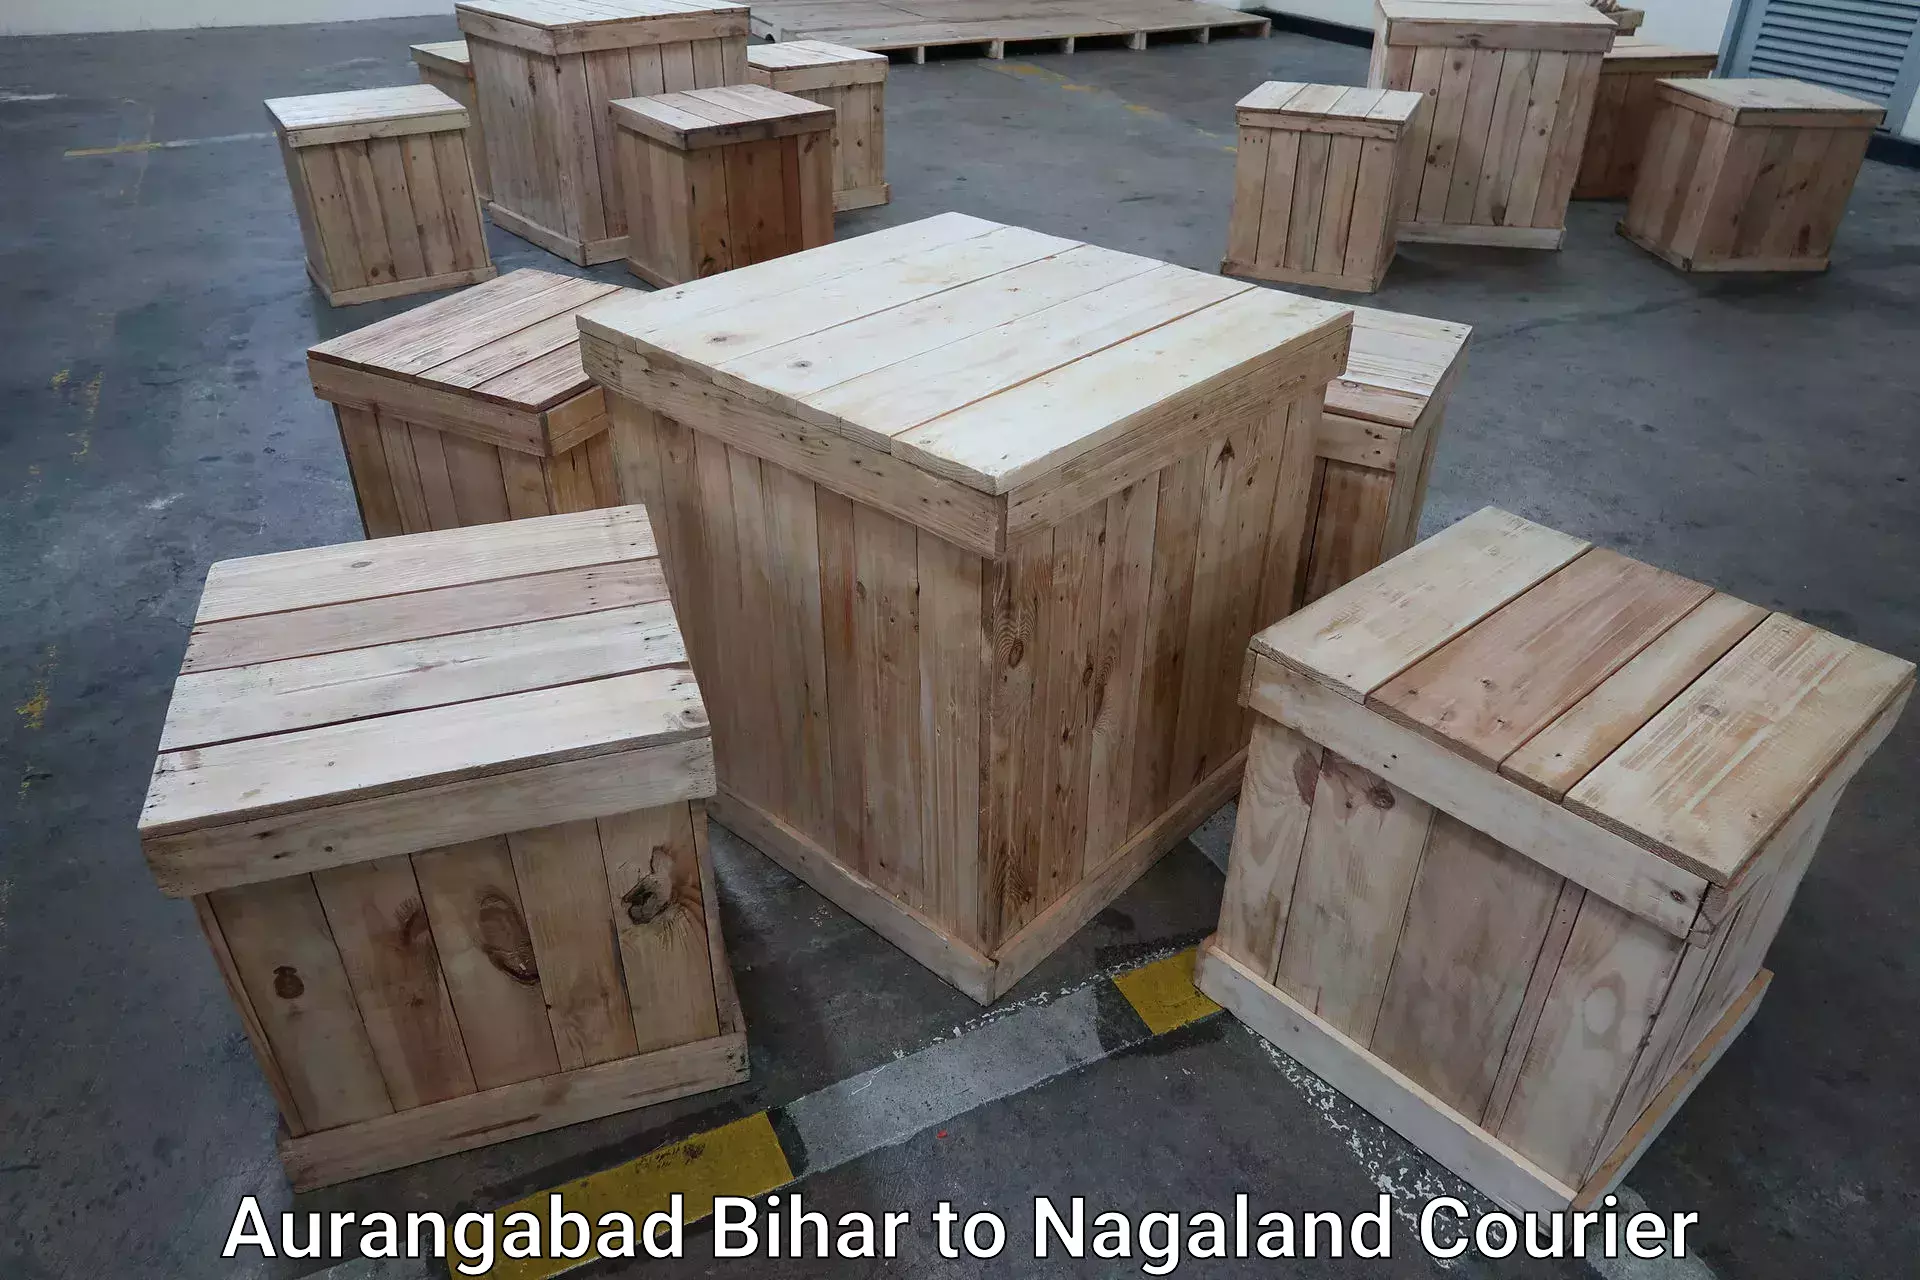 Baggage delivery optimization Aurangabad Bihar to Dimapur